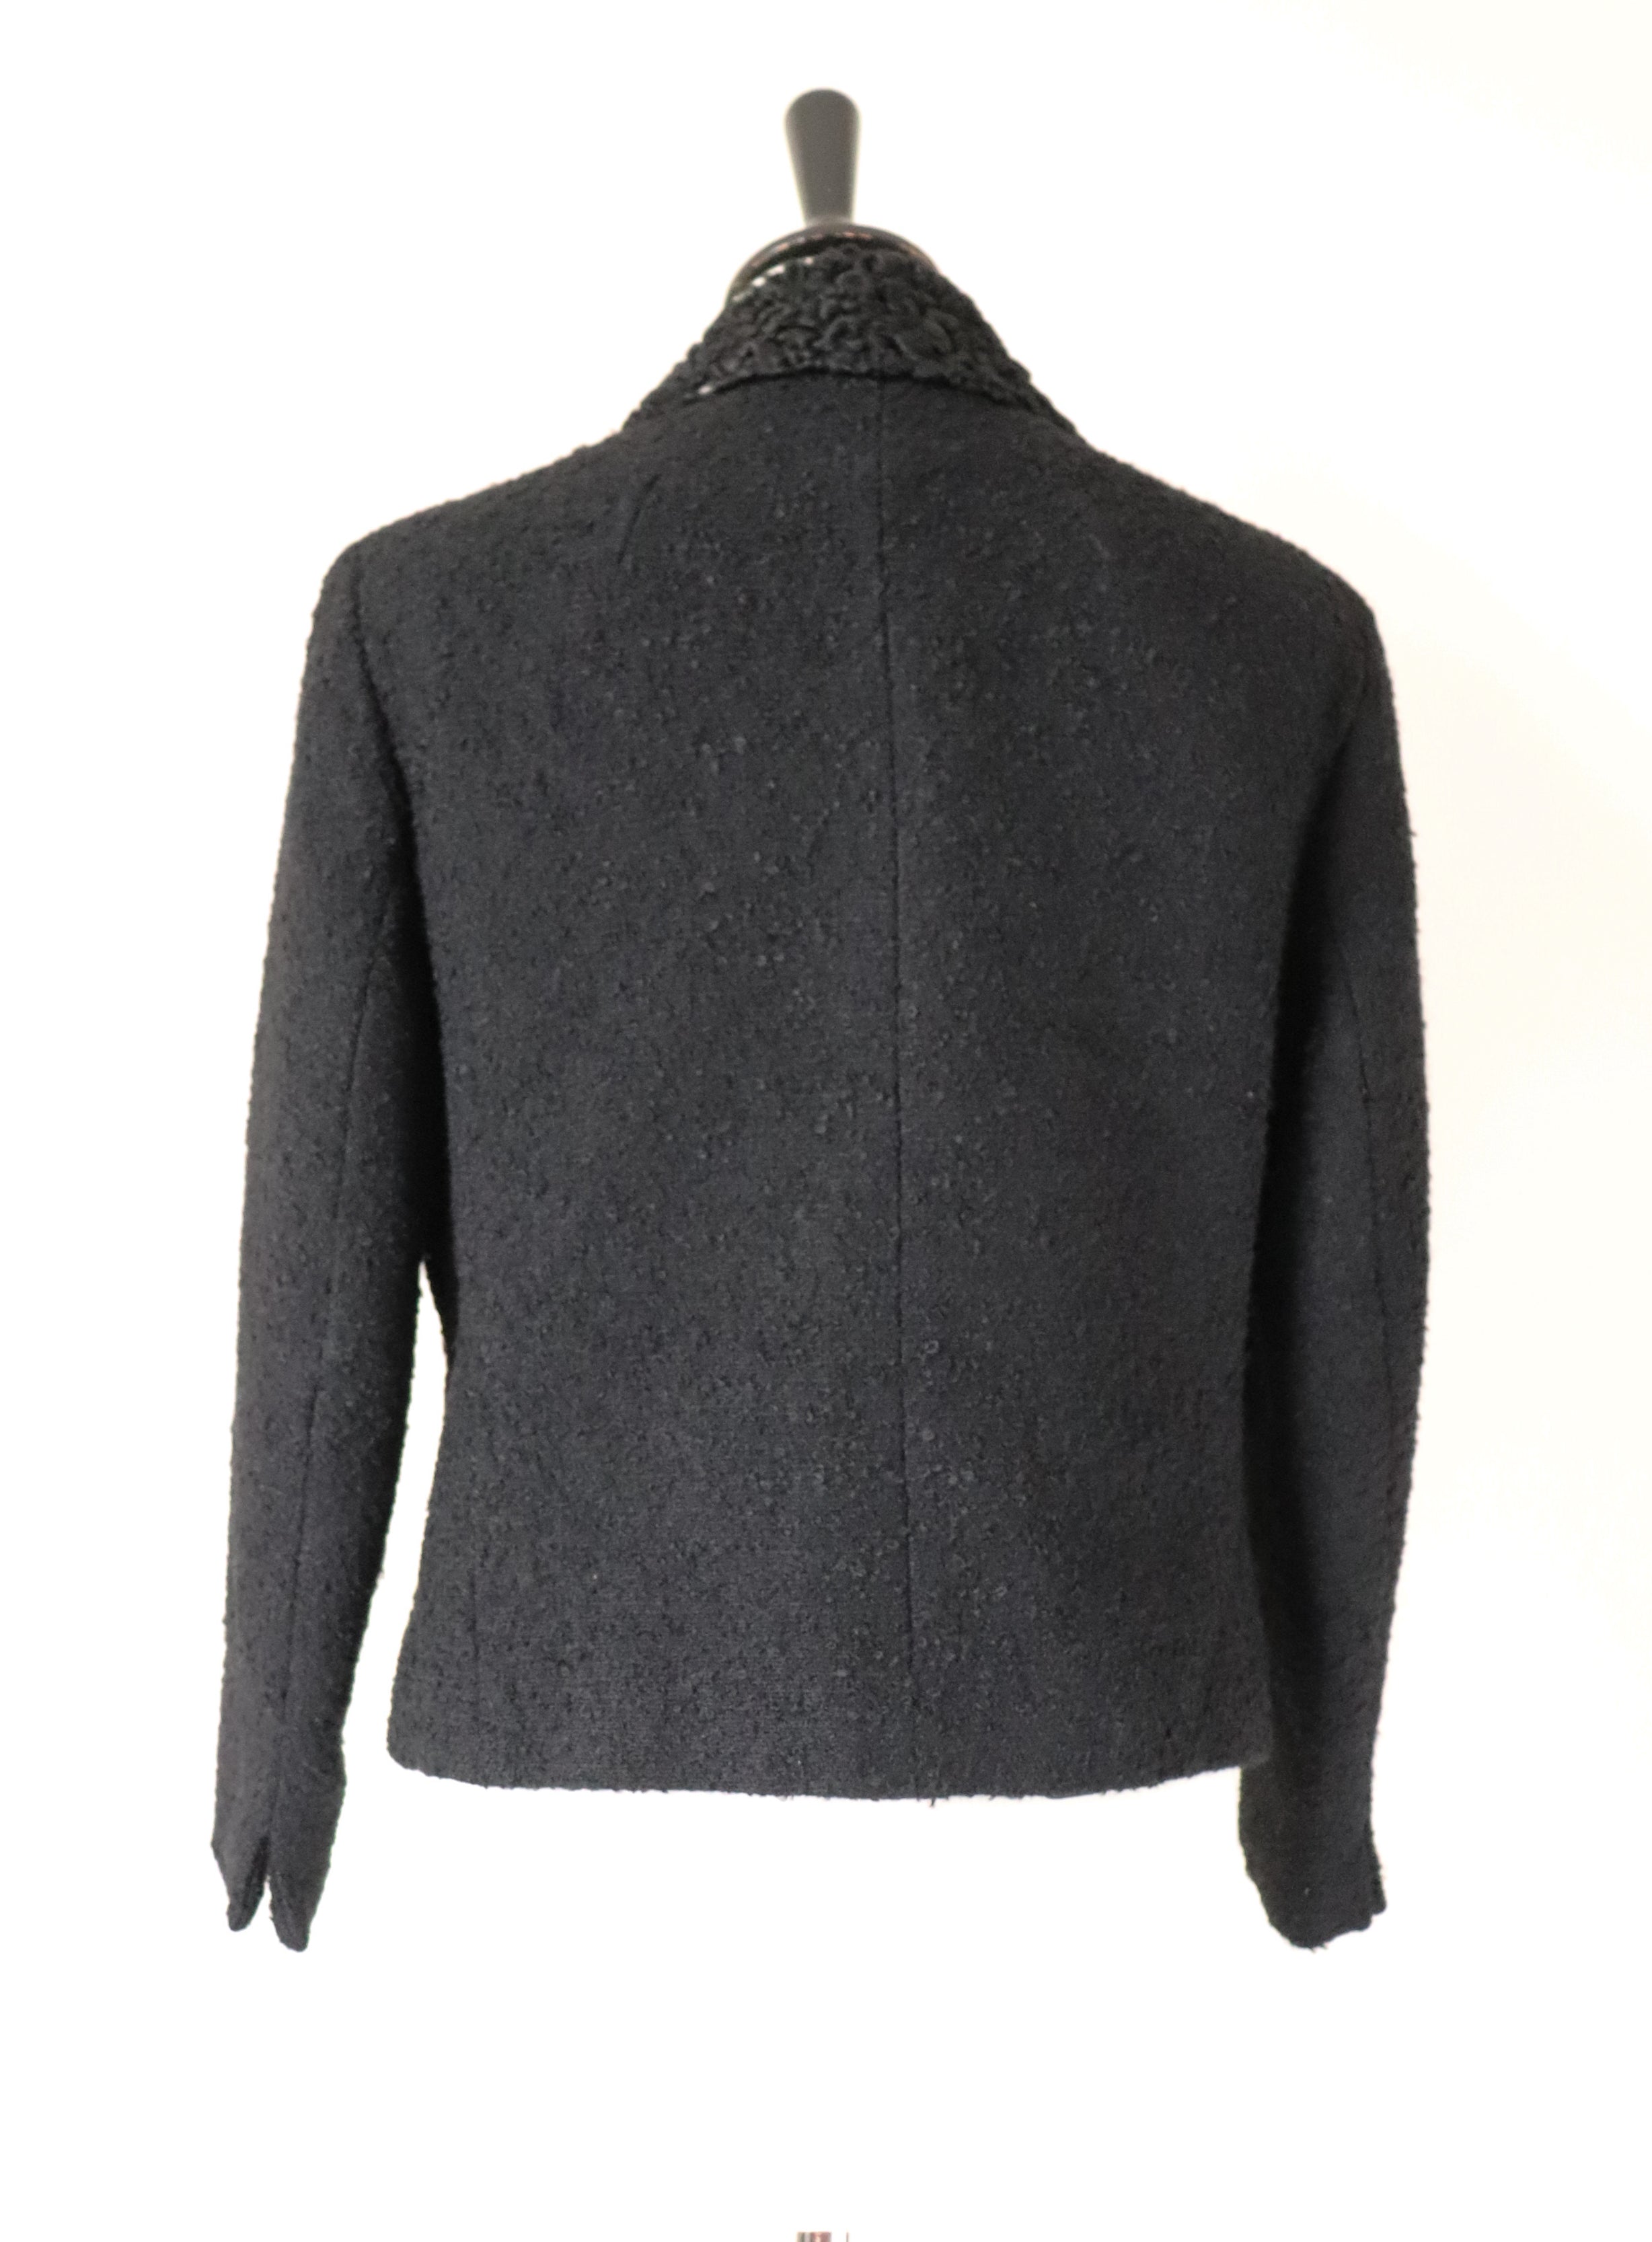 1960s Boucle Cropped Jacket - Astrakhan Collar - Createx Suisse - Vintage - S / UK 10